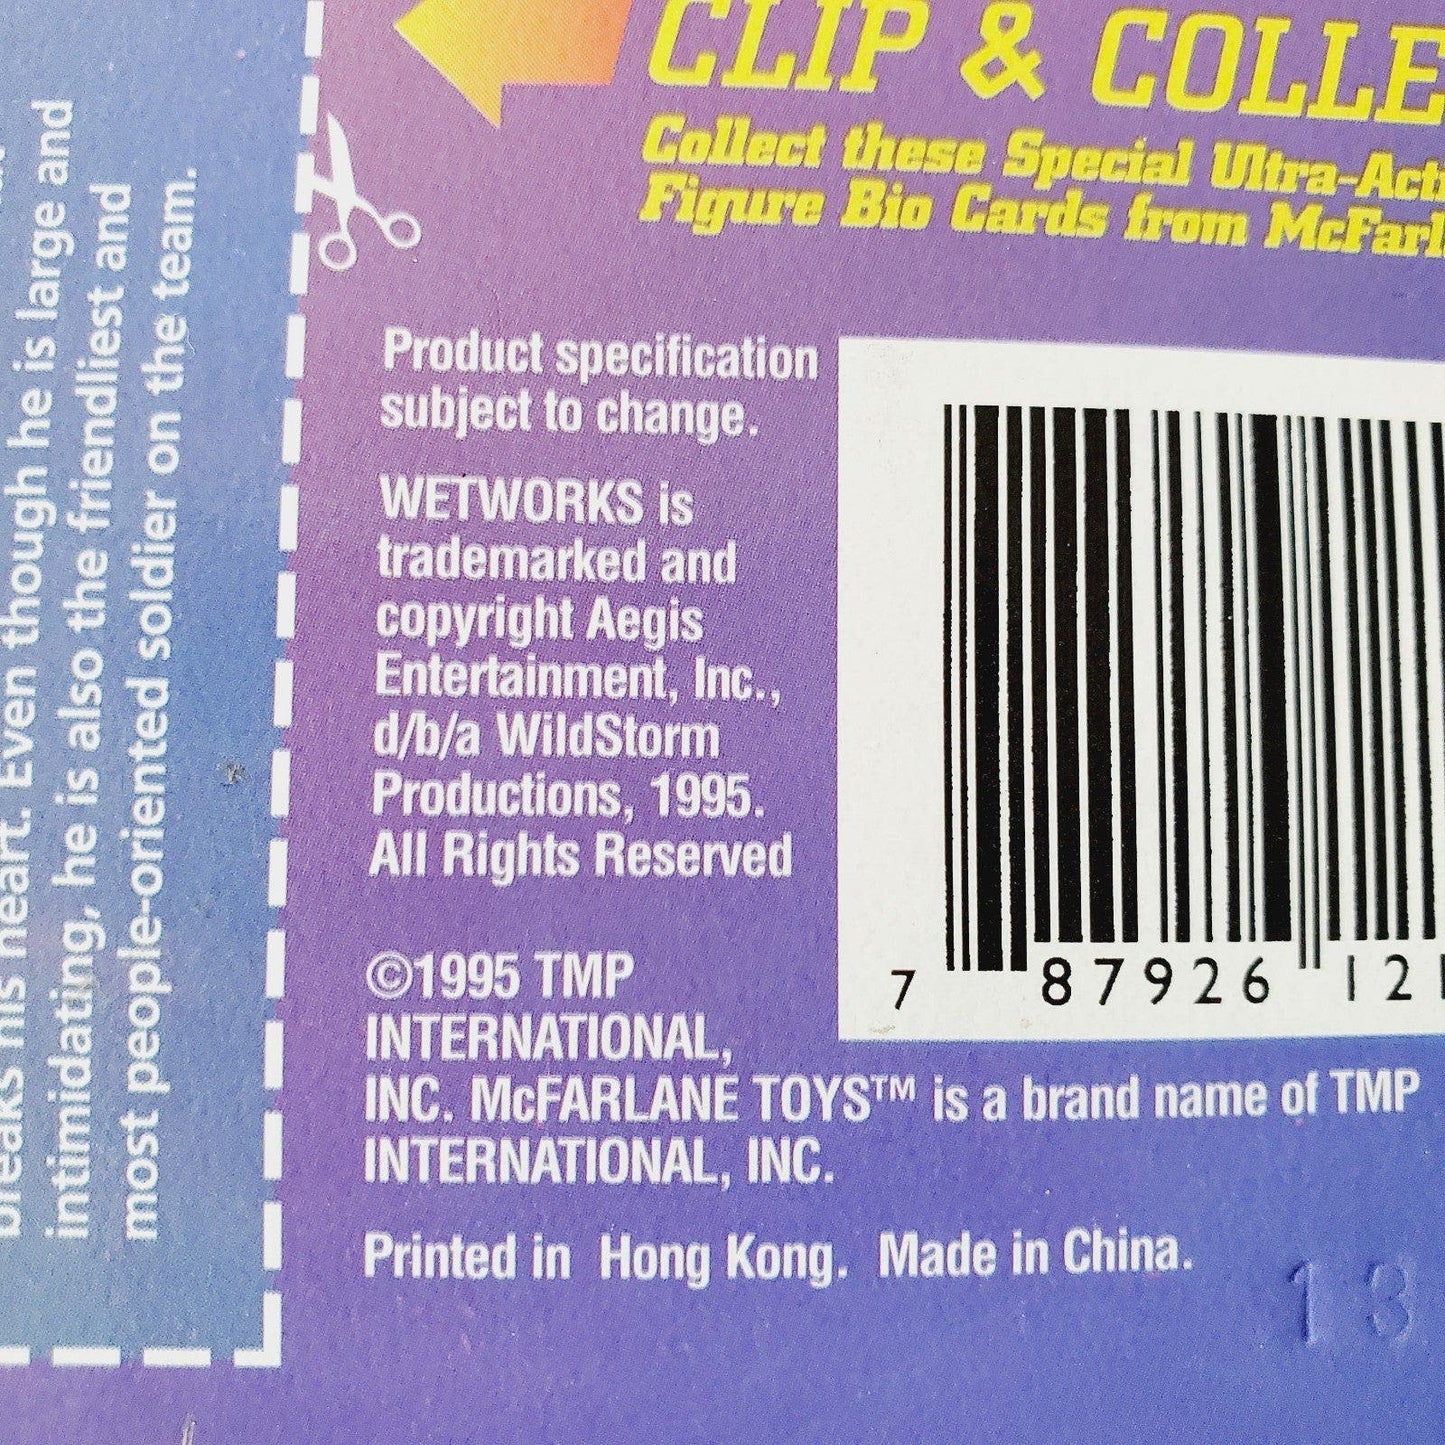 '95 Todd McFarlane's Toys Spawn Series 3 Cosmic Angela Action Figure- NIB(Unopened)